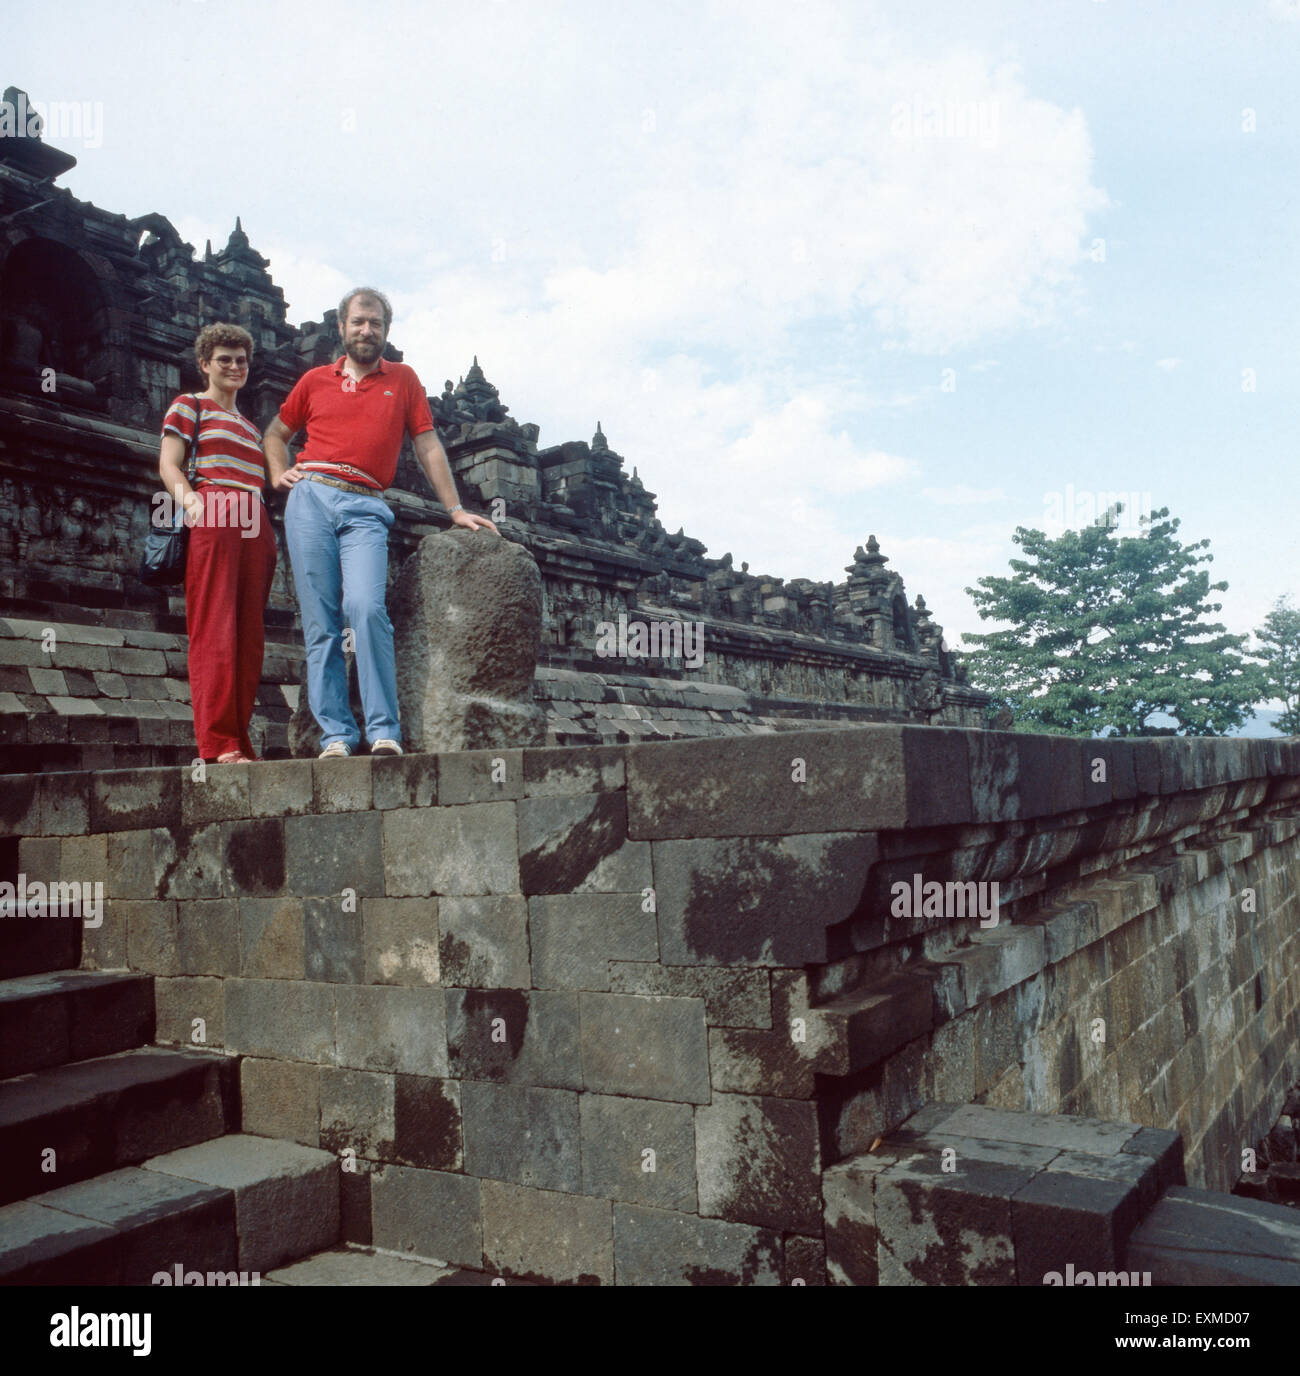 Die buddhistische Tempelanlage bei Borobudur Yogyakarta auf Java, Indonesien 1980er Jahre. Le complexe du temple bouddhiste Borobudur près de Yogyakarta sur l'île de Java, Indonésie 80. Banque D'Images